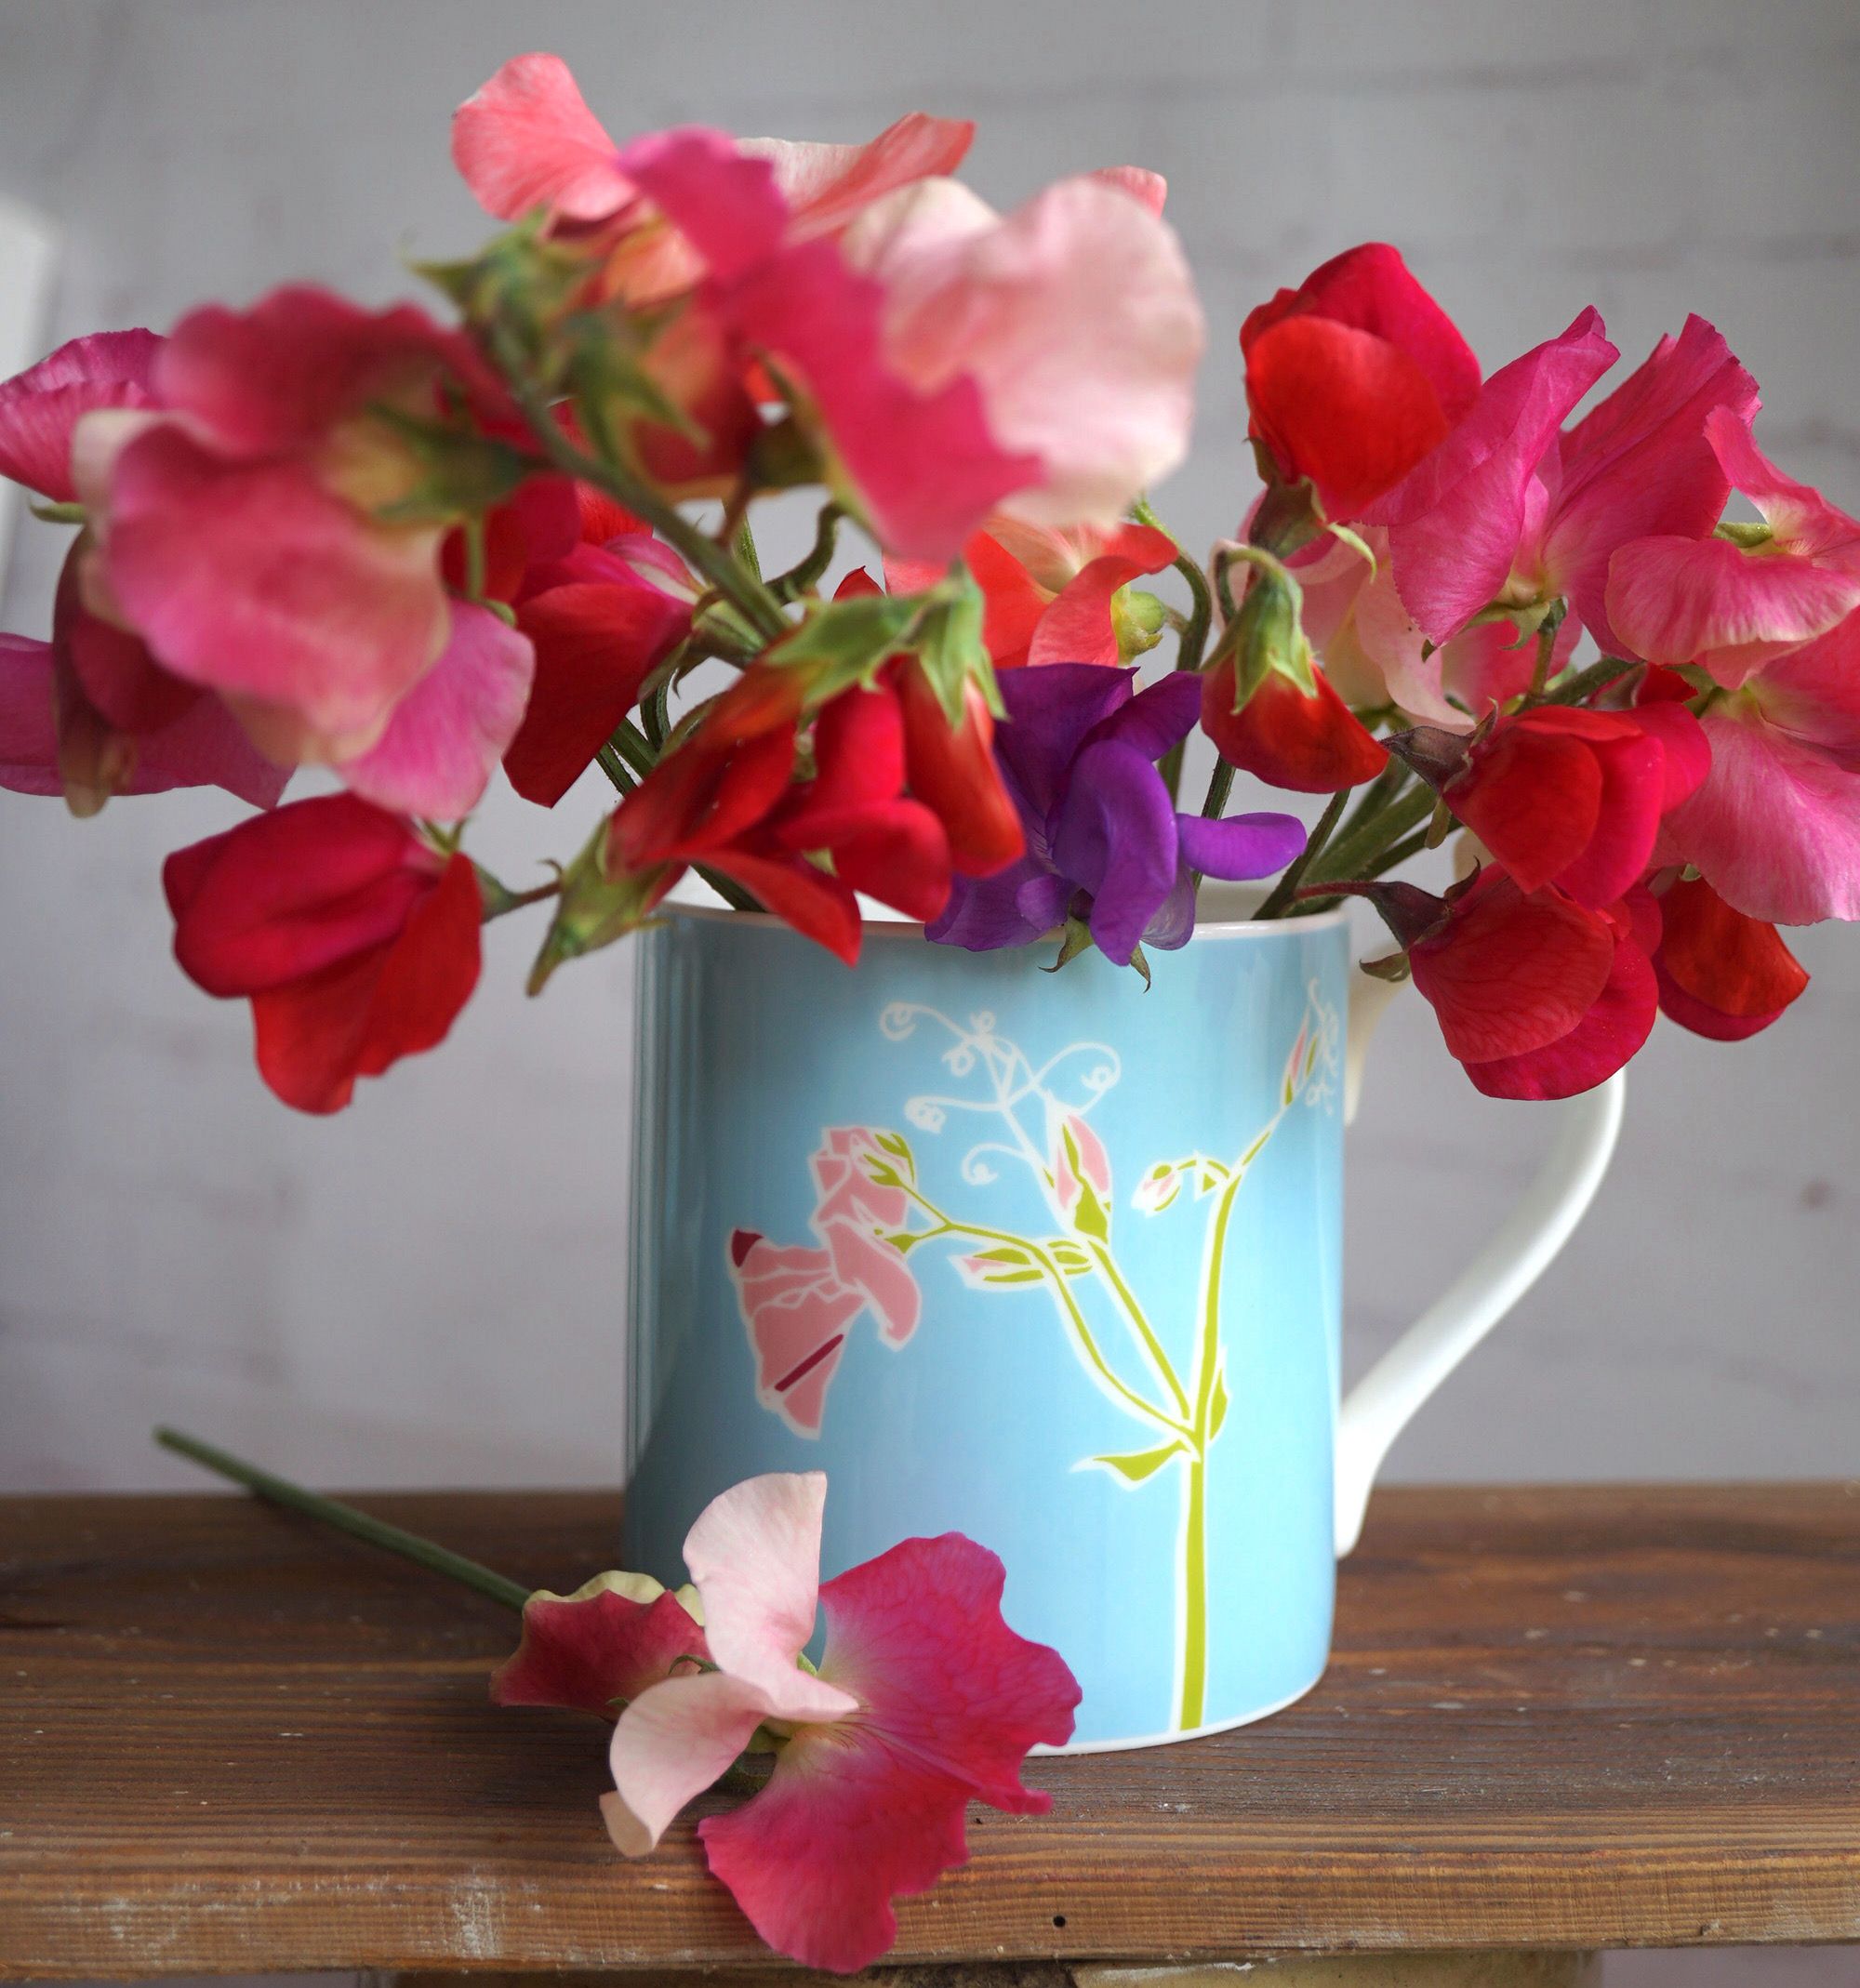 'Sweet pea' fine bone china flower mug made in England